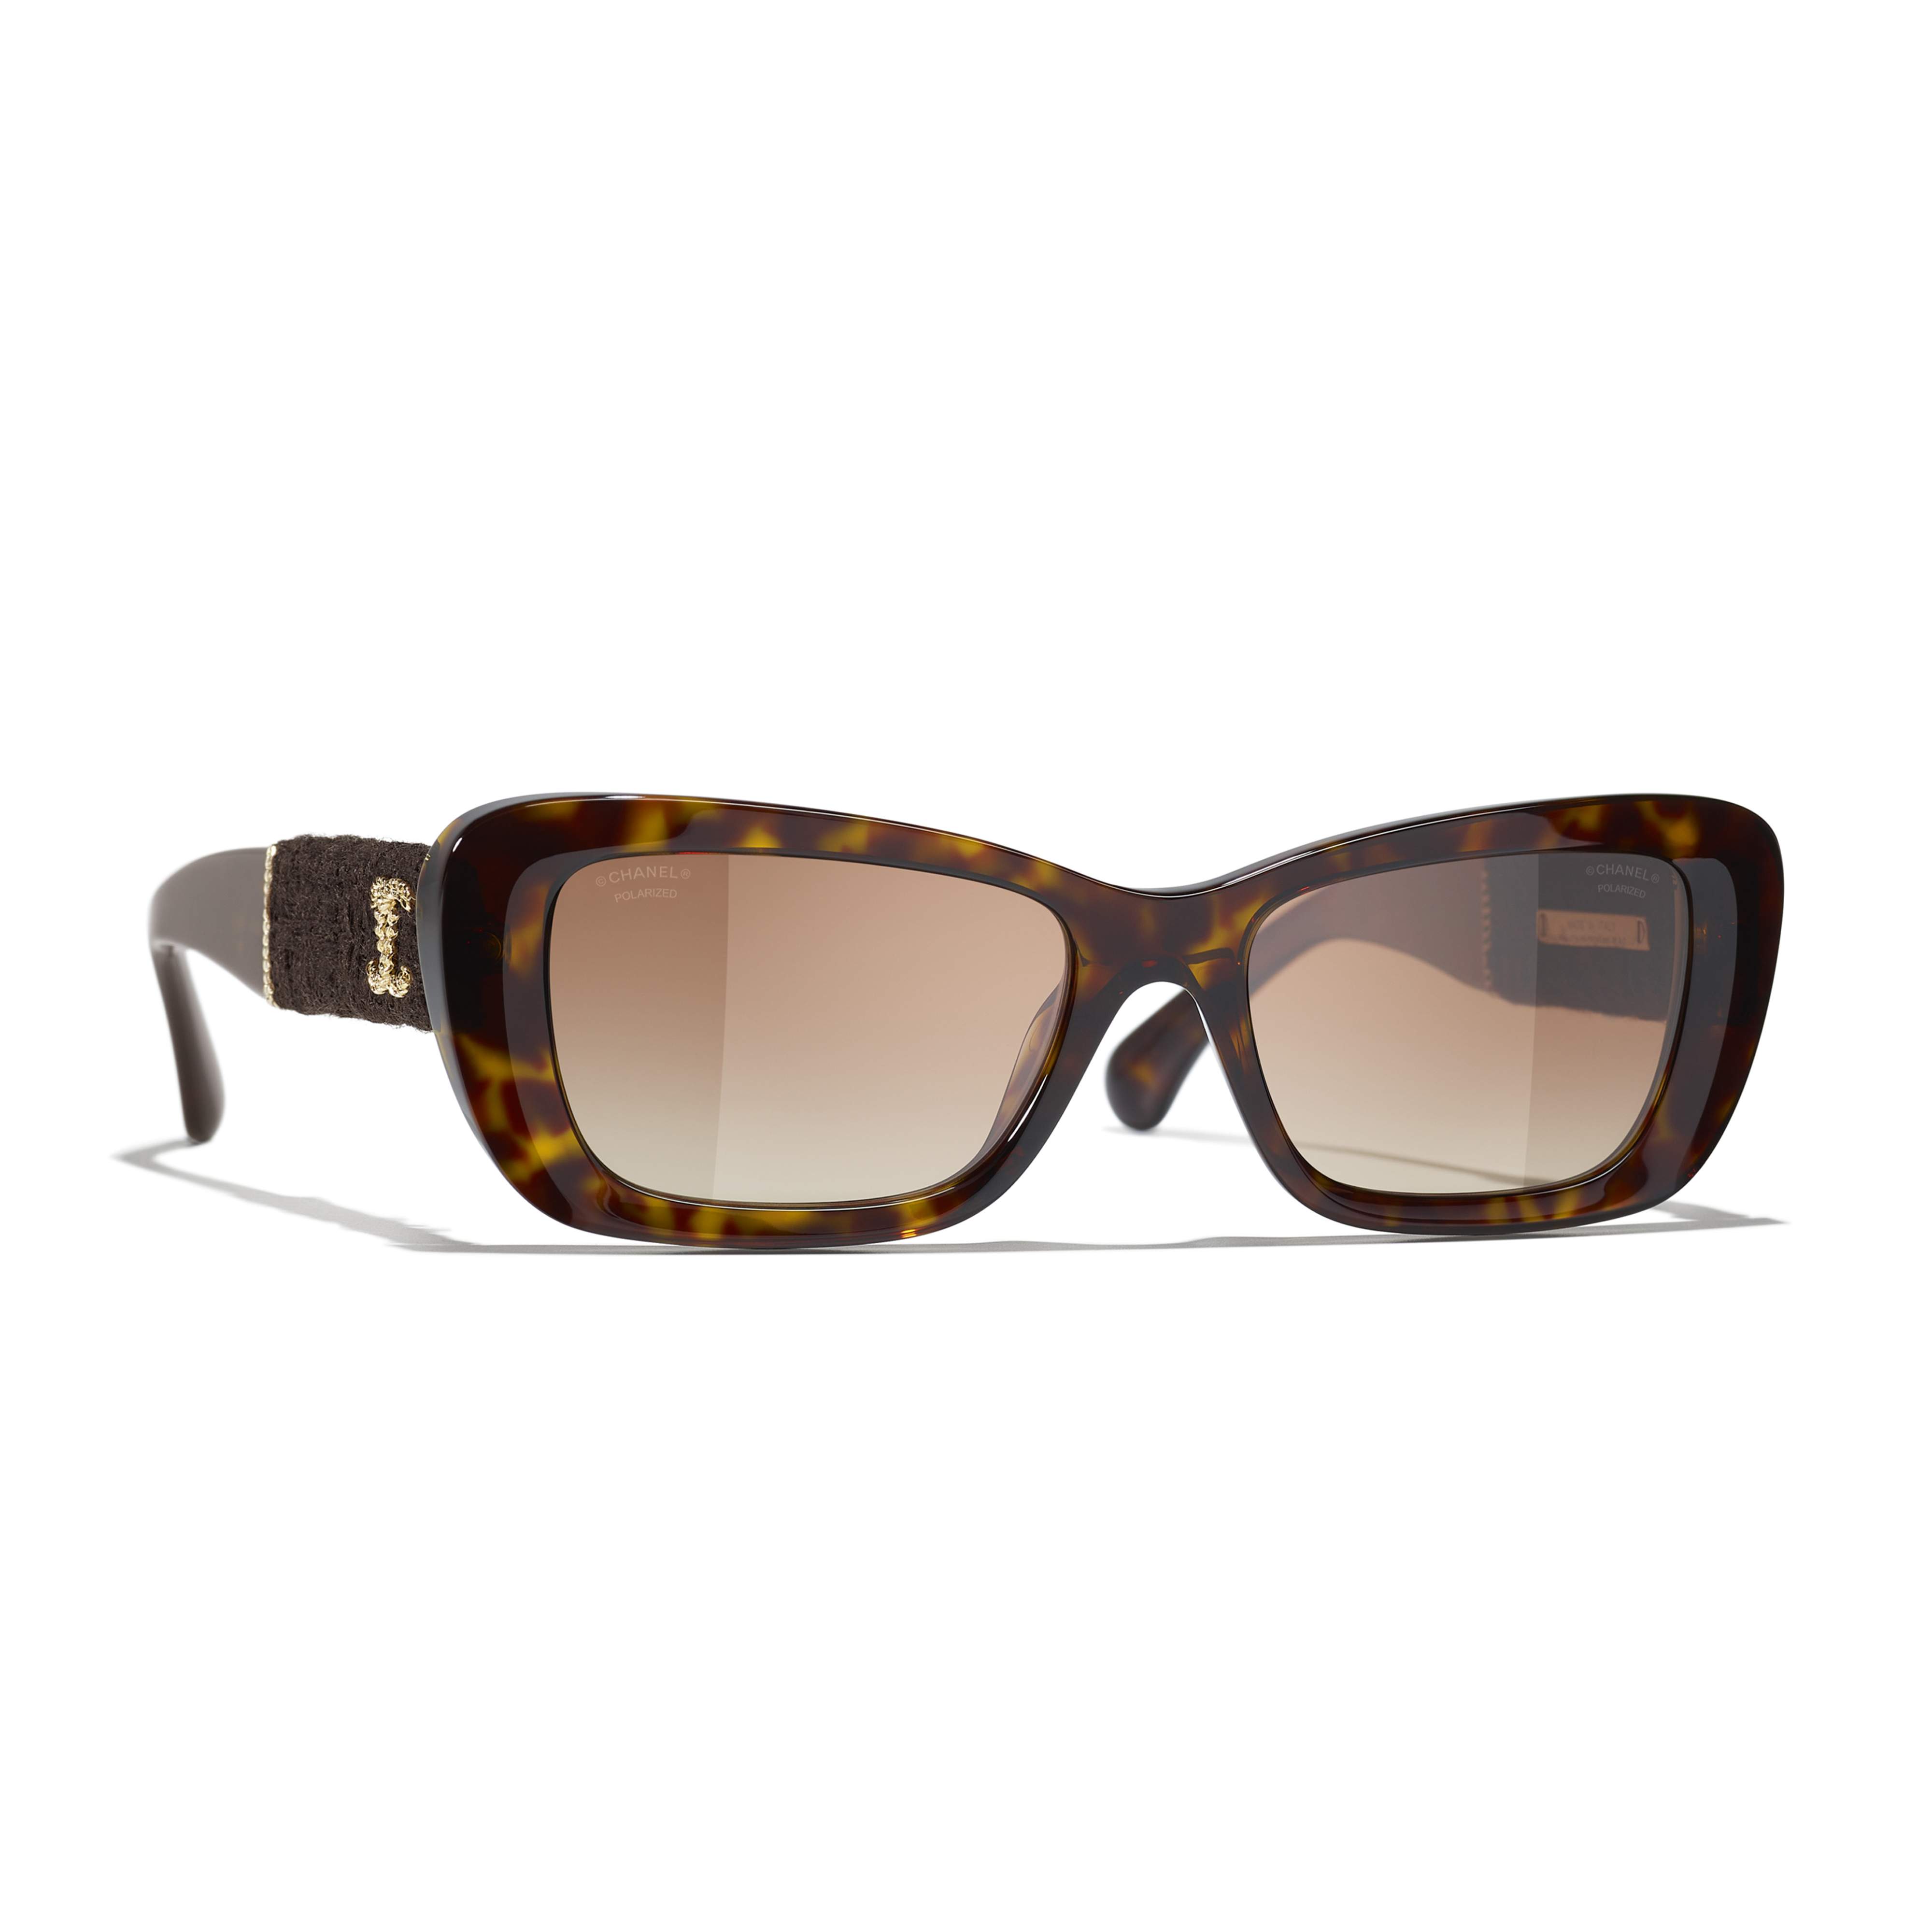 Sunglasses CHANEL CH5514 C714/S9 53-17 Dark havana in stock 